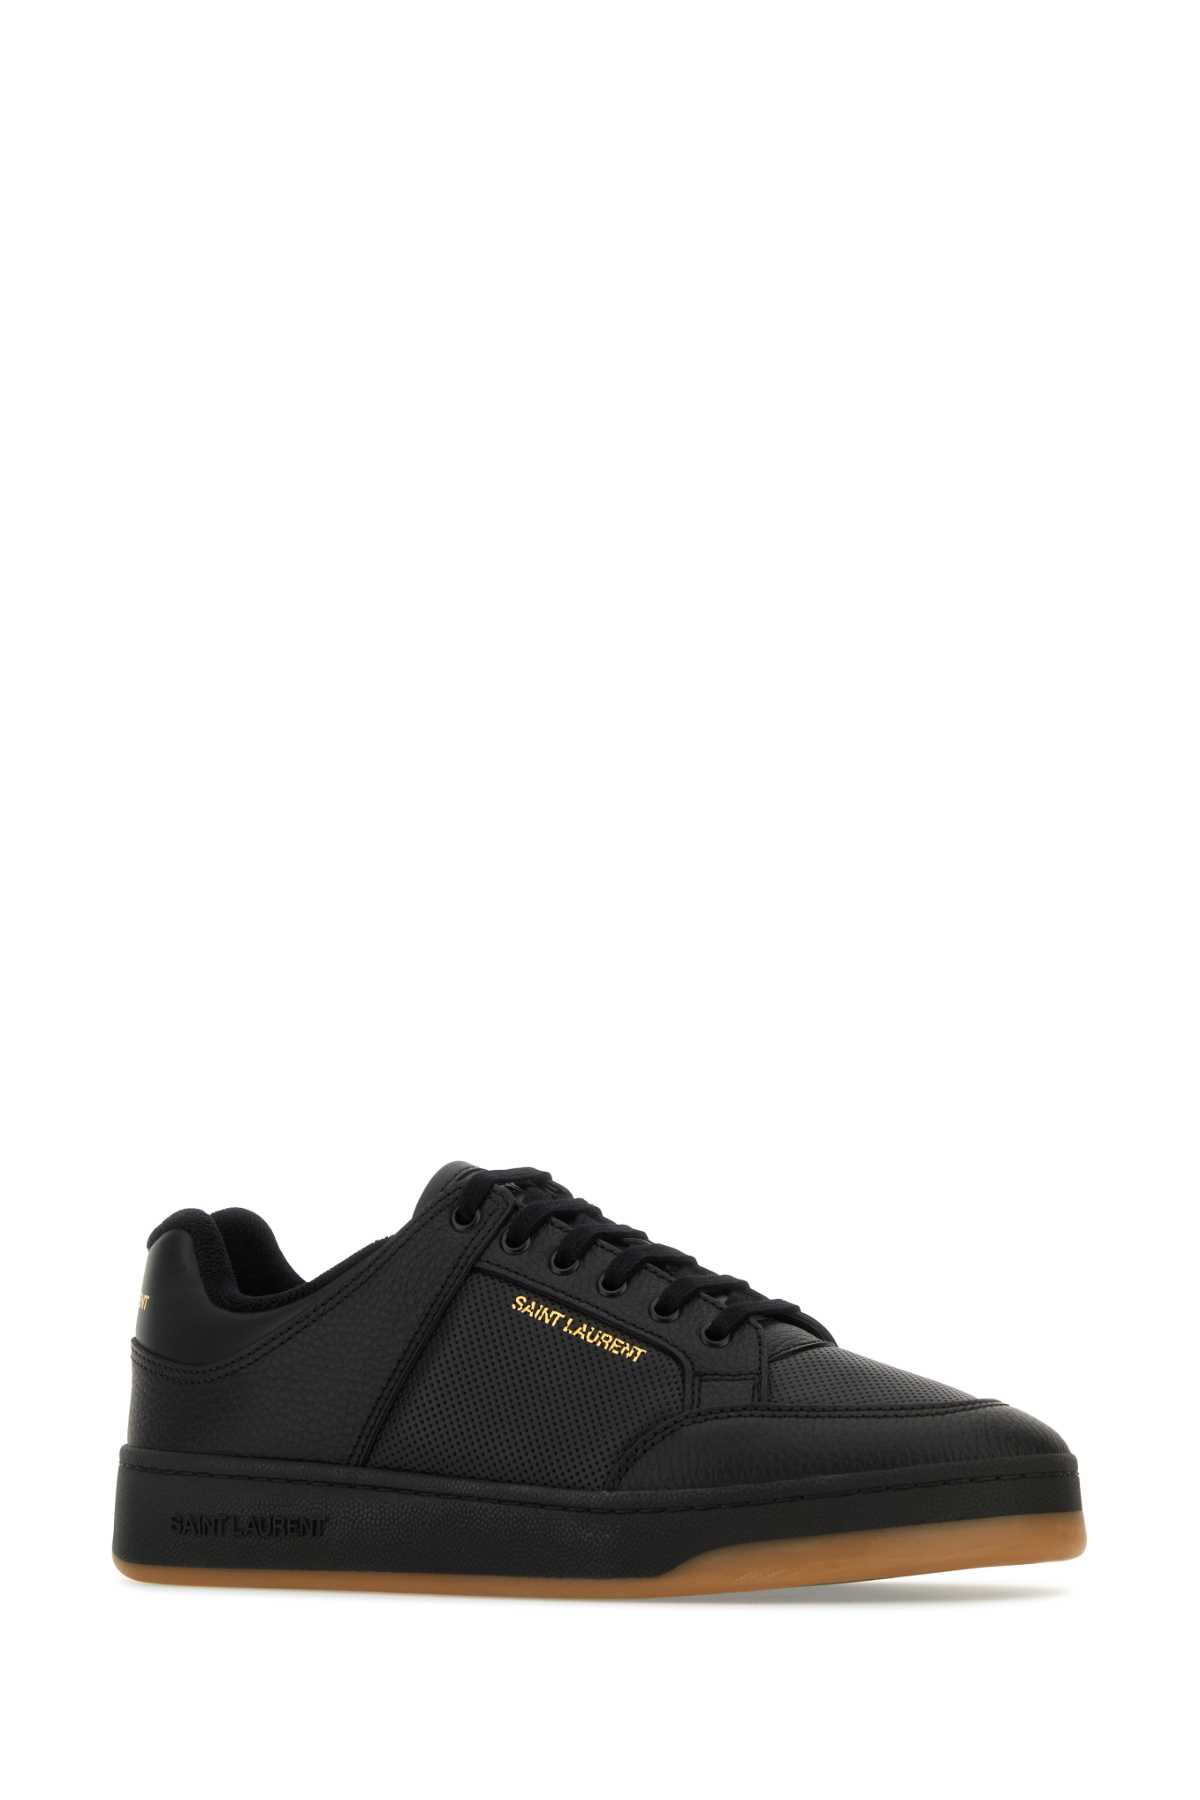 Saint Laurent Black Leather Sl/61 Sneakers In Neroneroneronero-